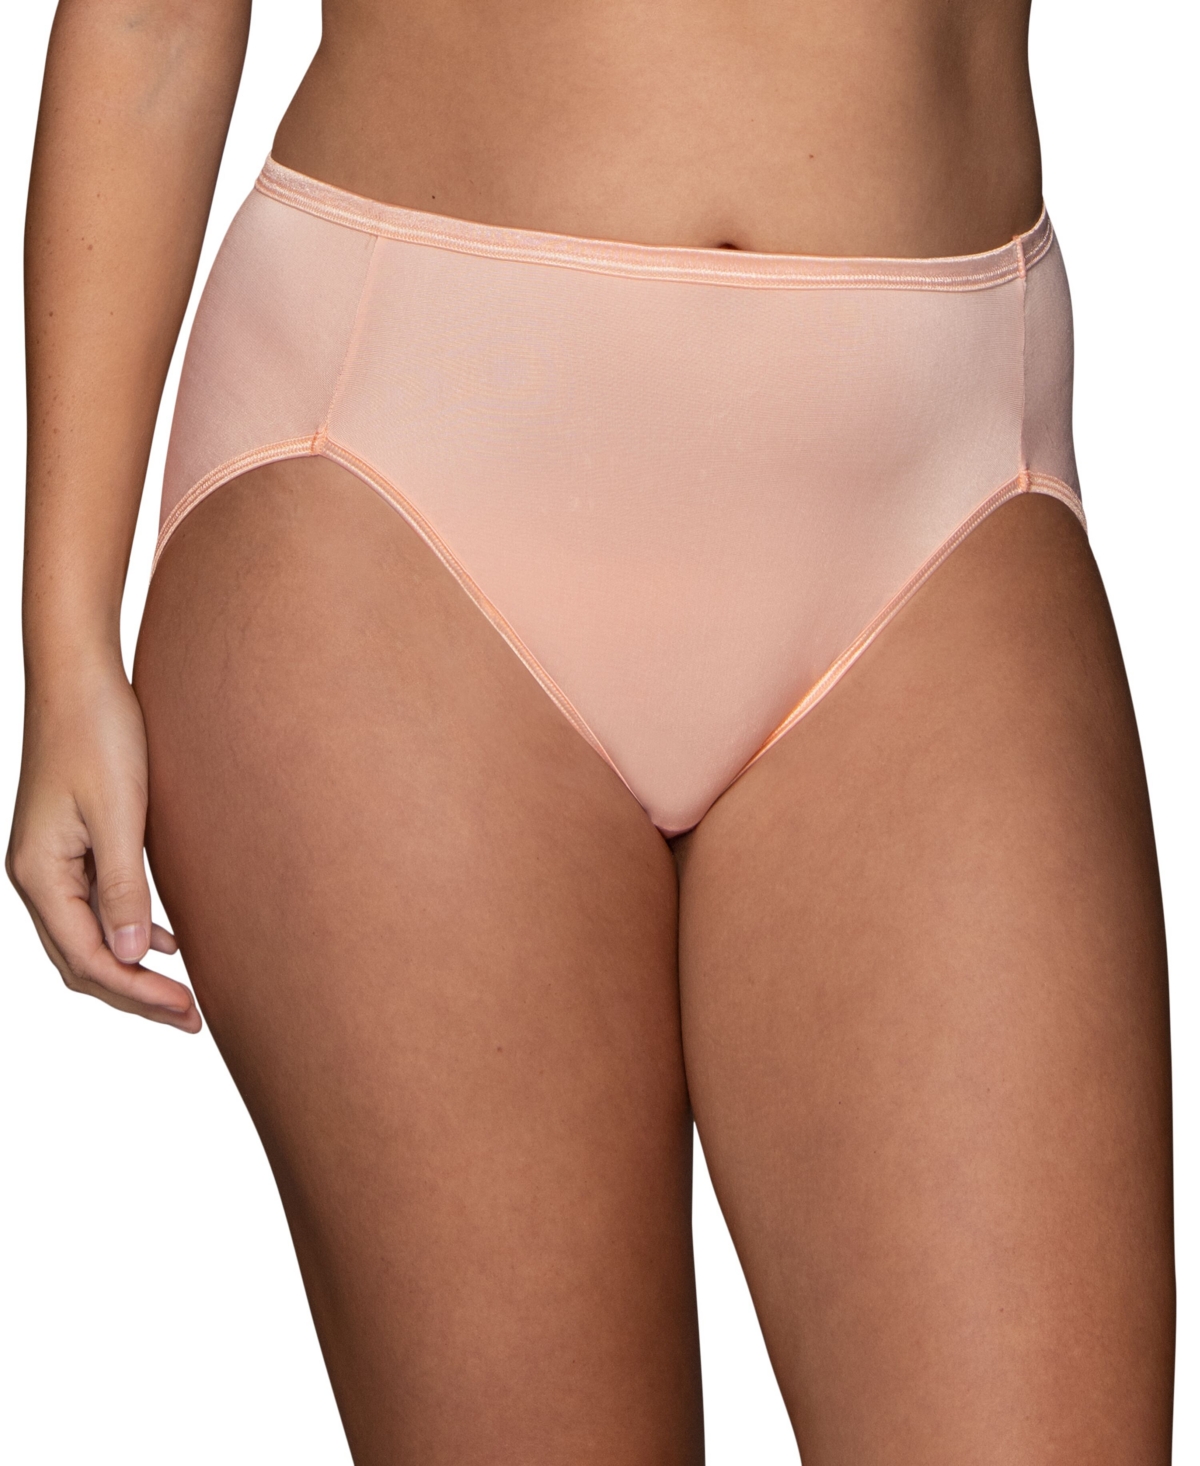 Vanity Fair Illumination Hi-cut Brief Underwear 13108, Also Available In Extended Sizes In Peach Please